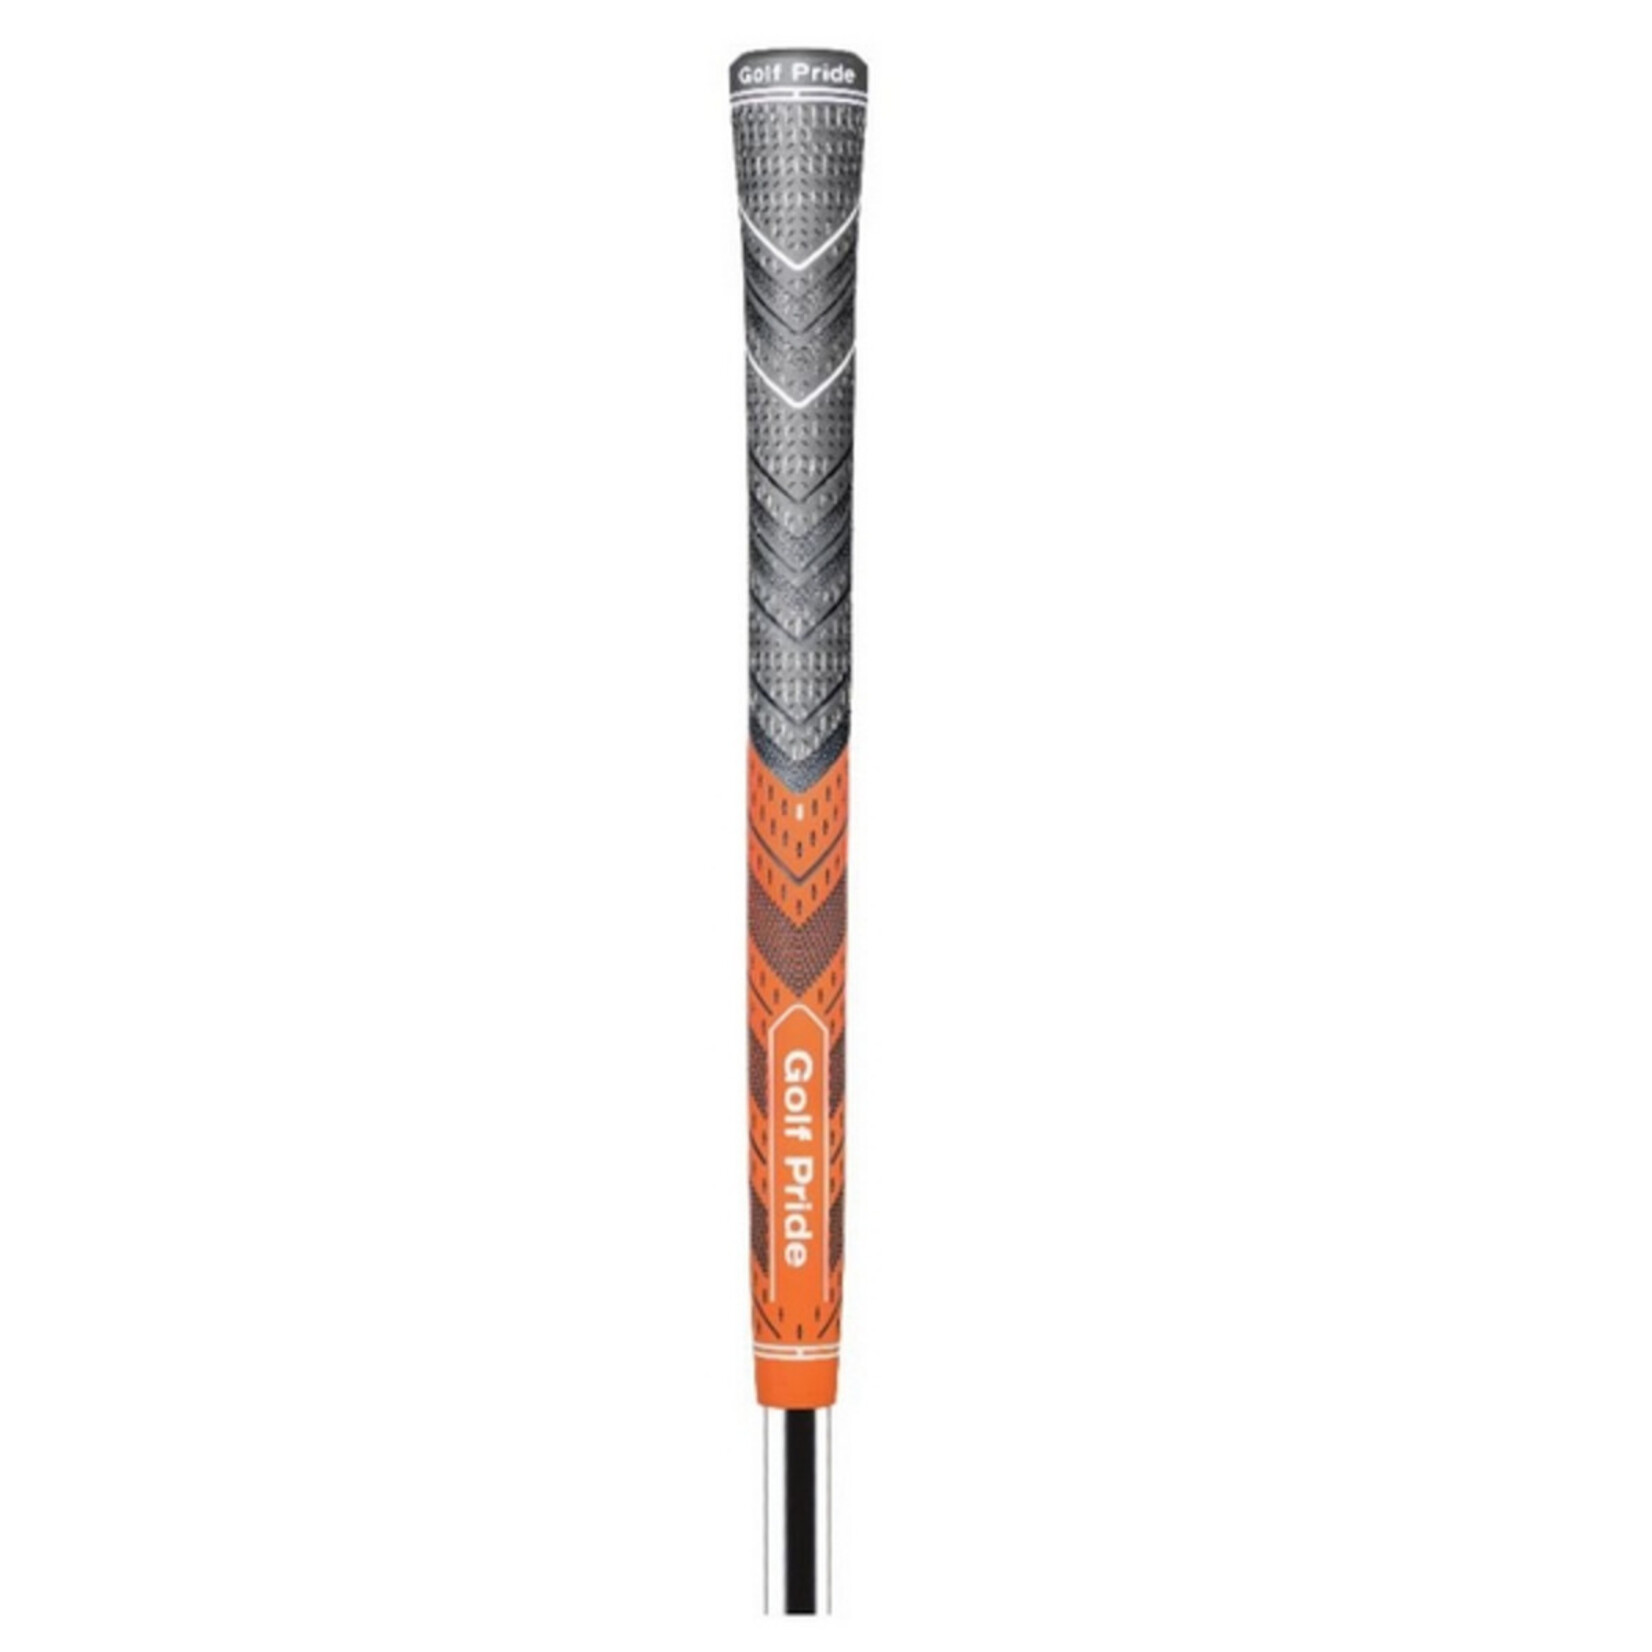 Golf Pride Golf Pride - MCC Multi Compound - Standard - Orange & Grey